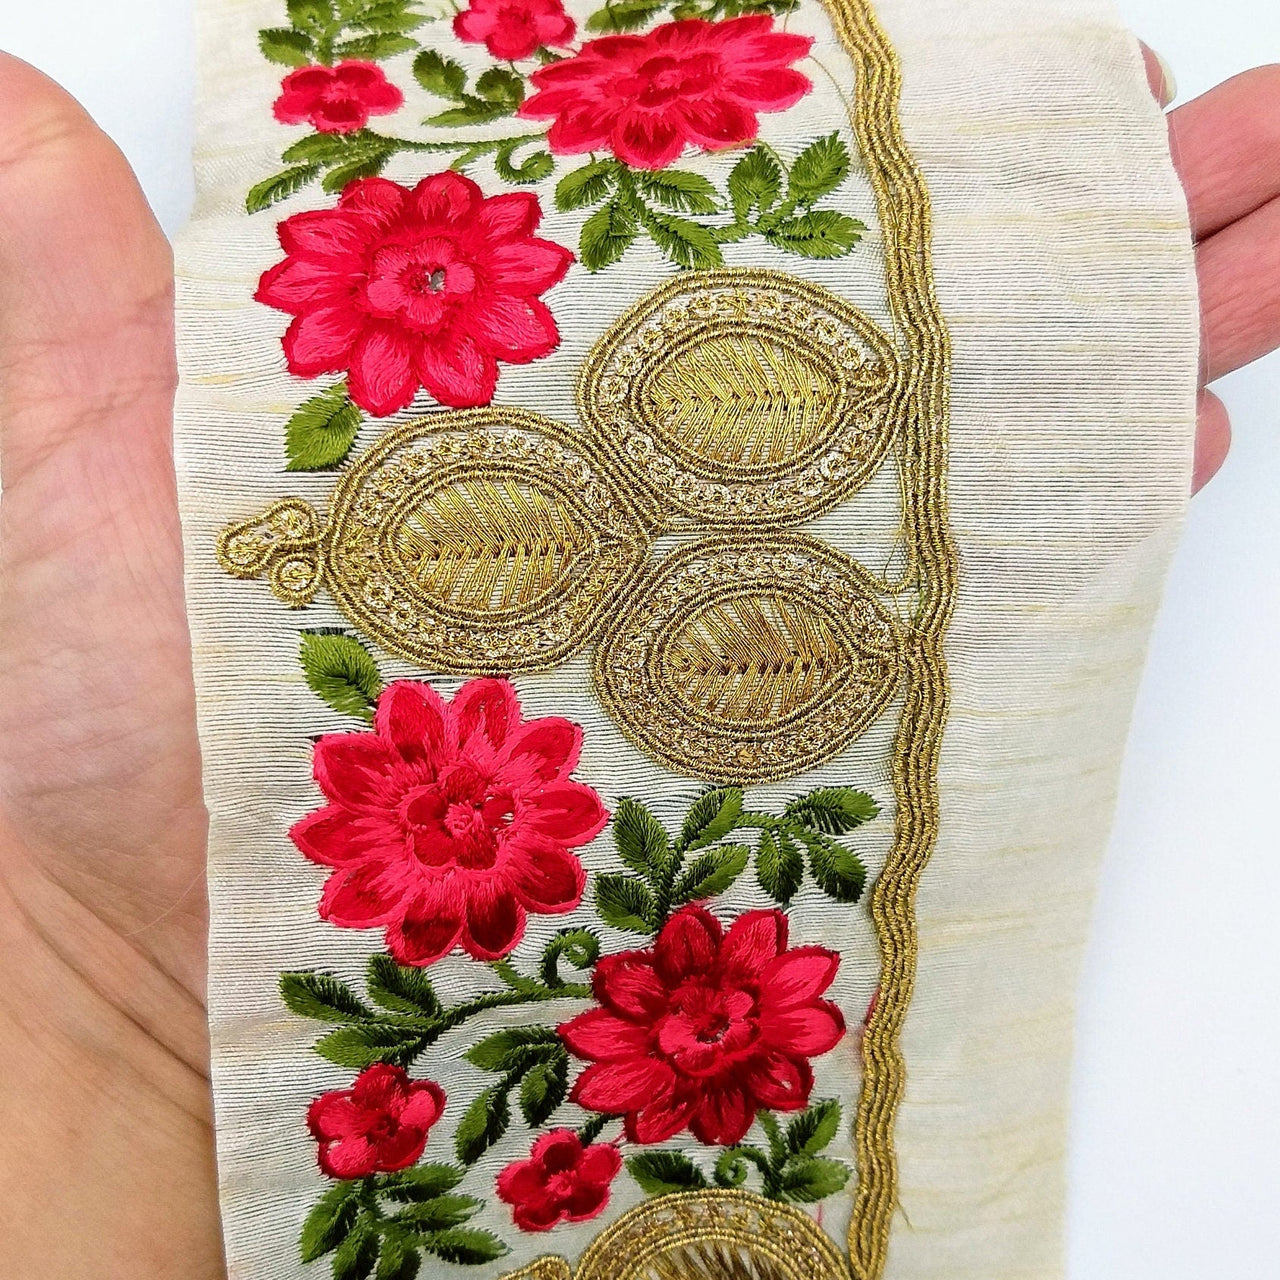 Beige Silk Fabric Trim, Green, Pink & Gold Floral Embroidery Indian Sari Border Trim By Yard Decorative Trim Craft Lace